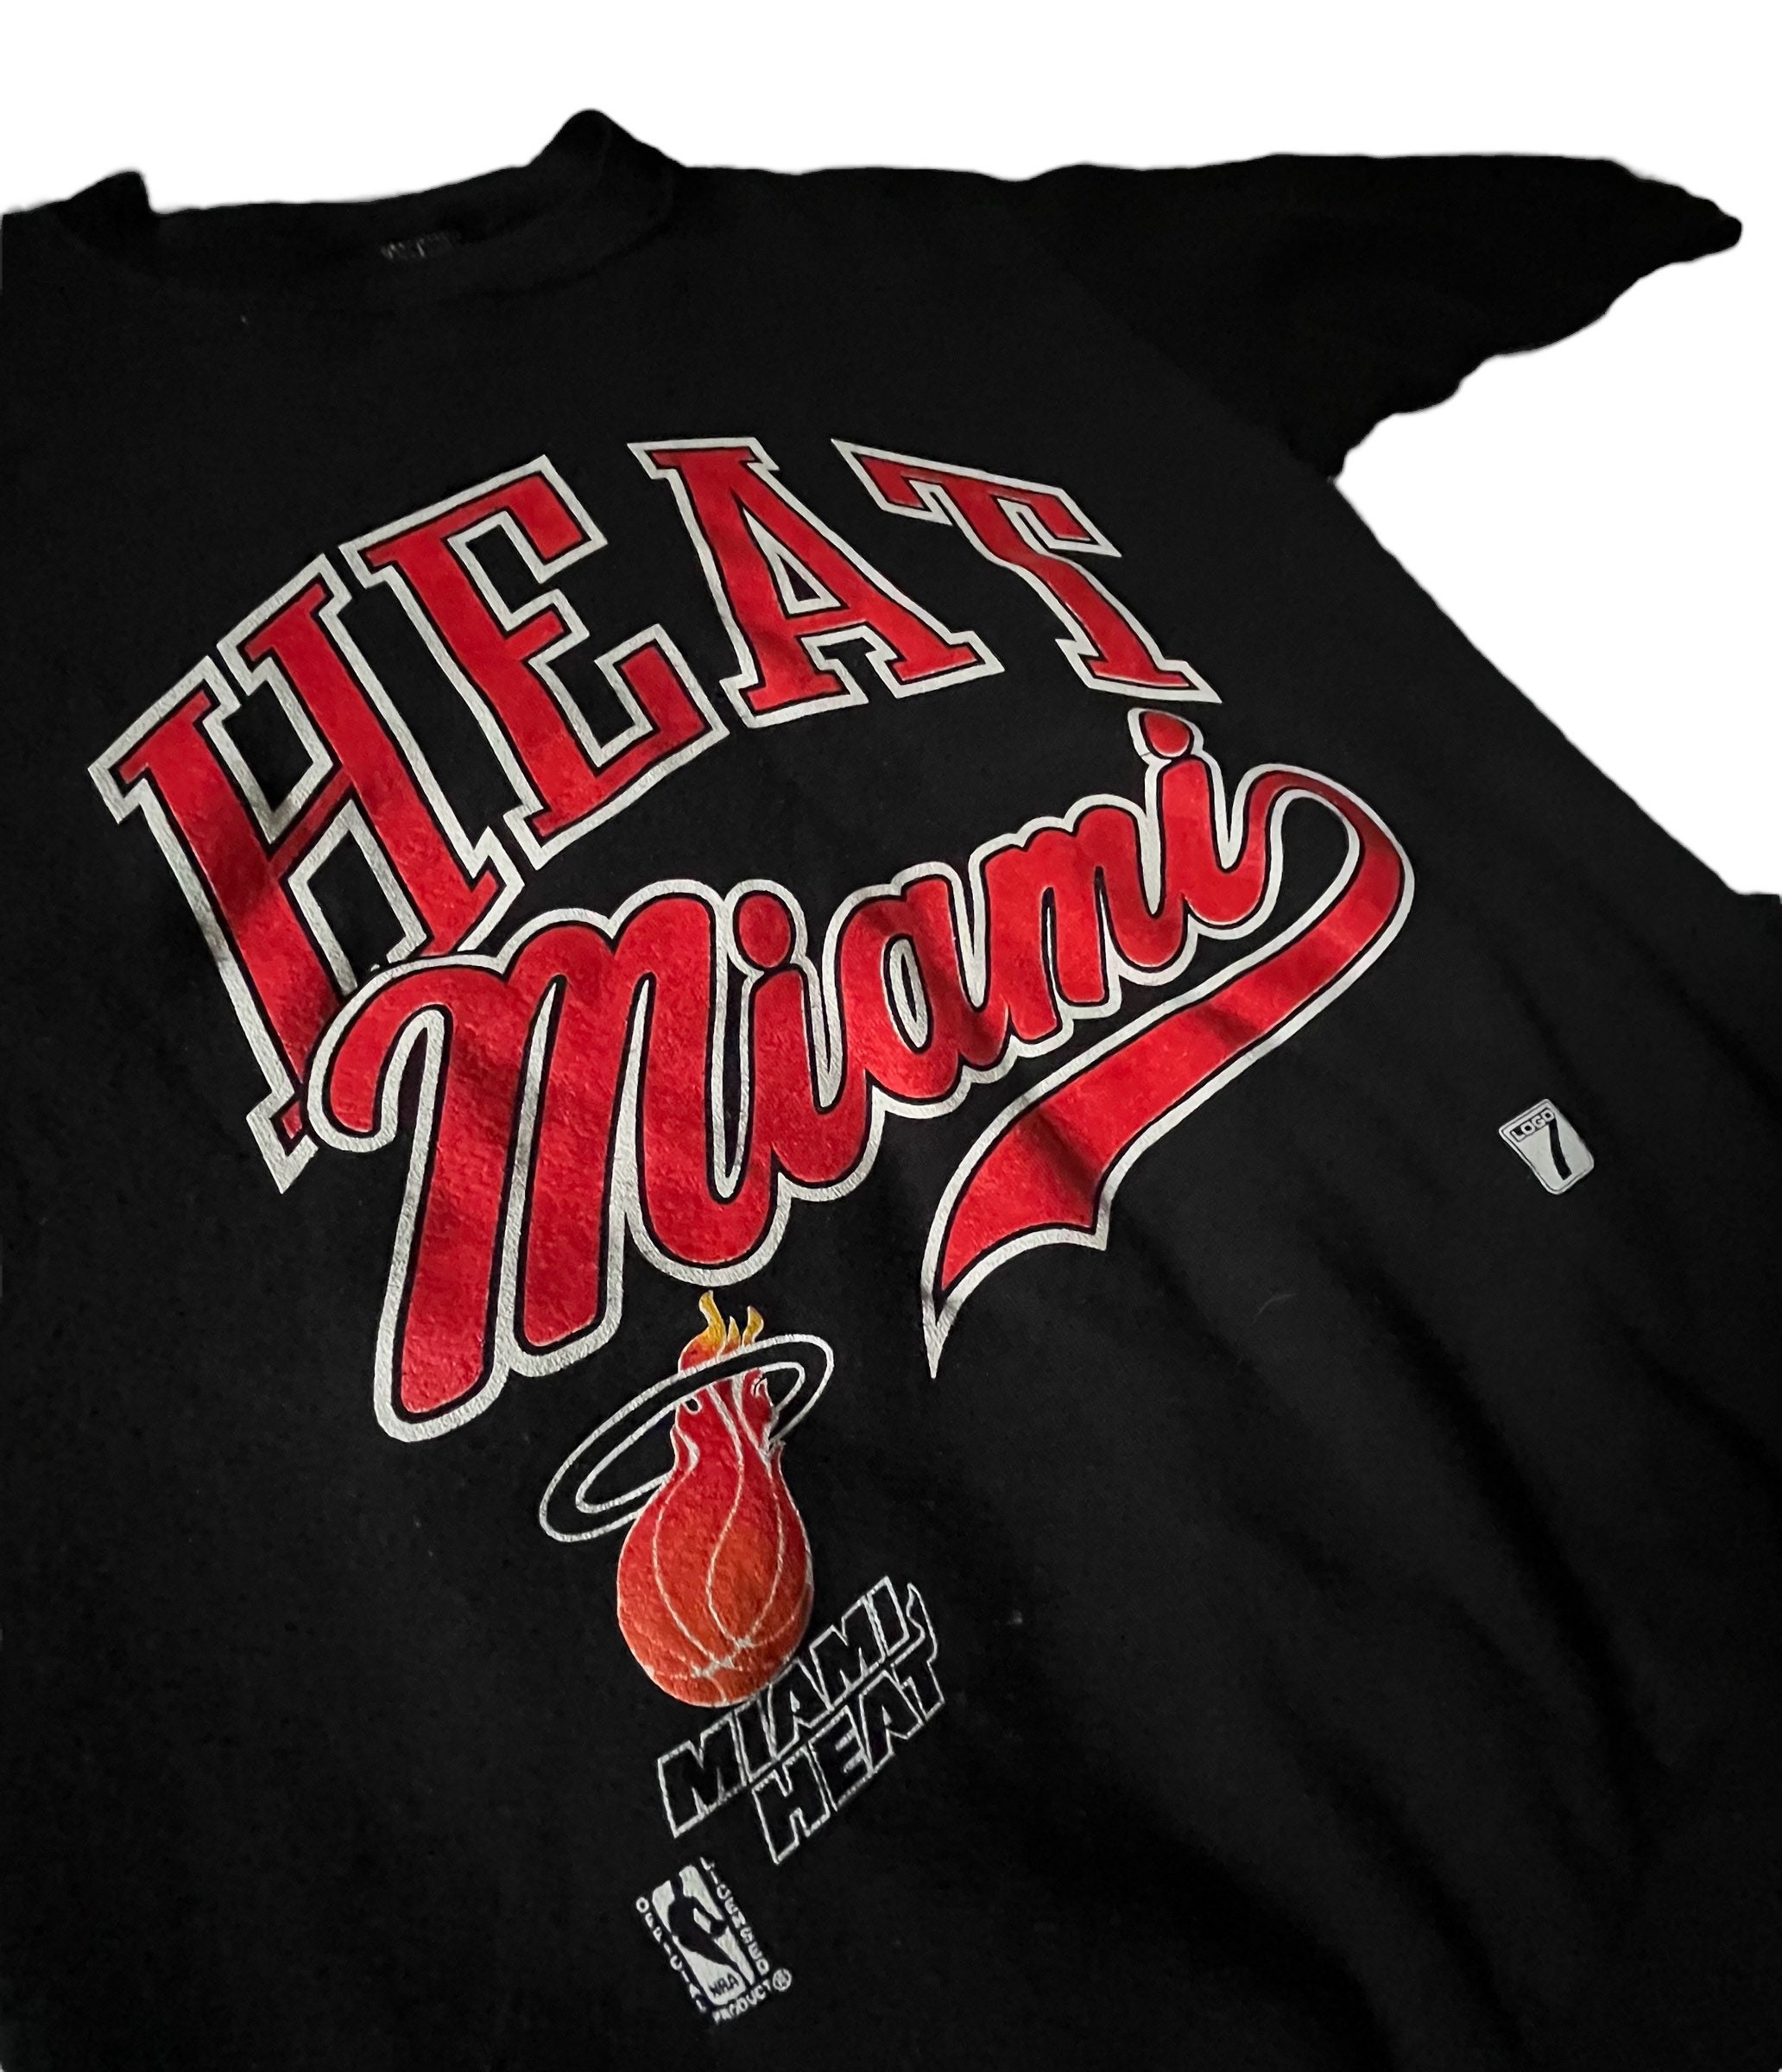 NBA Starter Miami Heat V Neck Jersey Black Red Short Sleeve Mens Adult